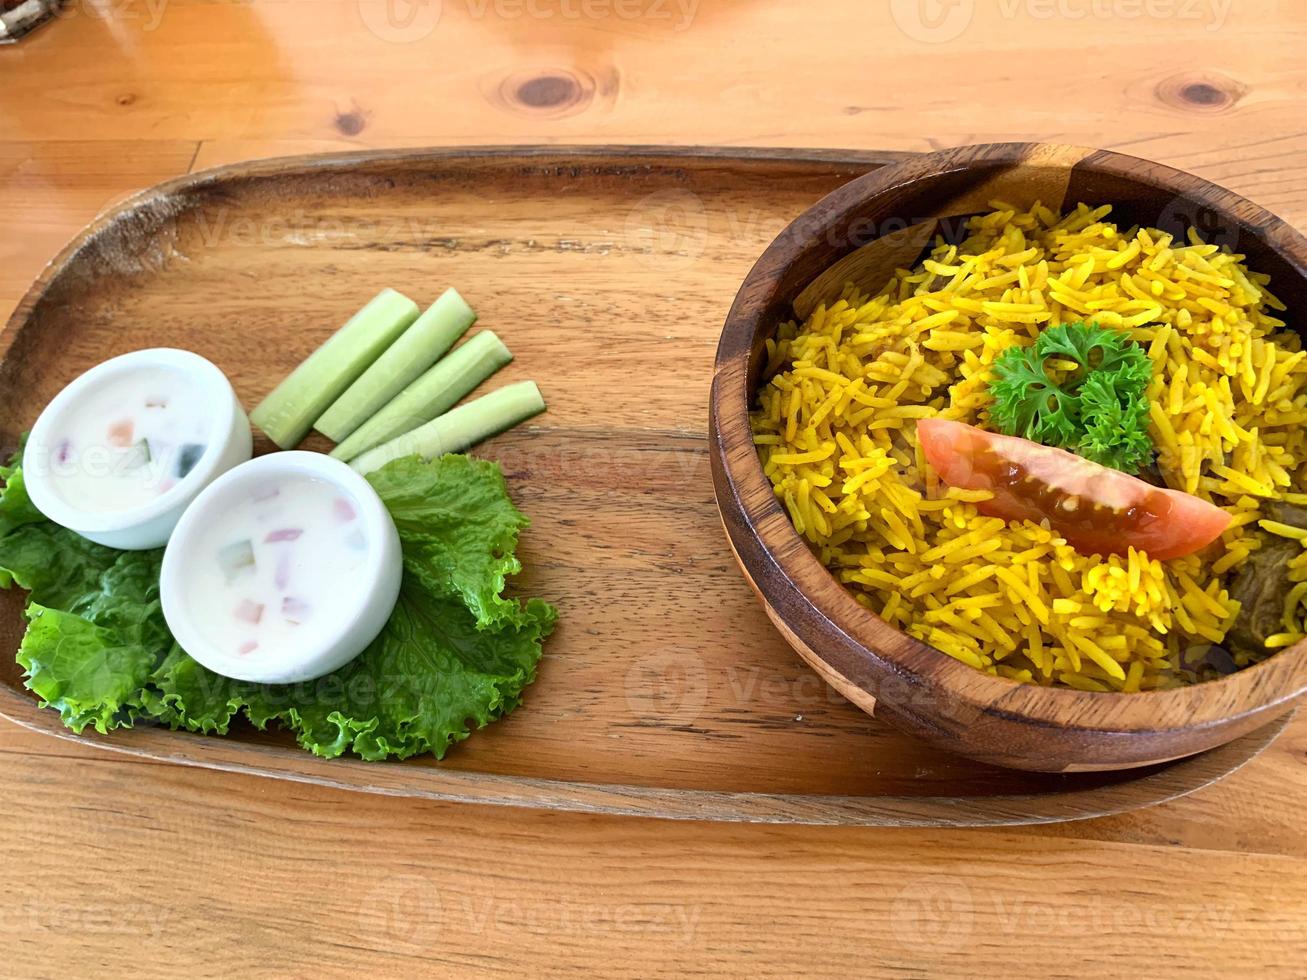 arroz biryani pilaf de cordero con carne de cordero y verduras pepino junto con yogur foto